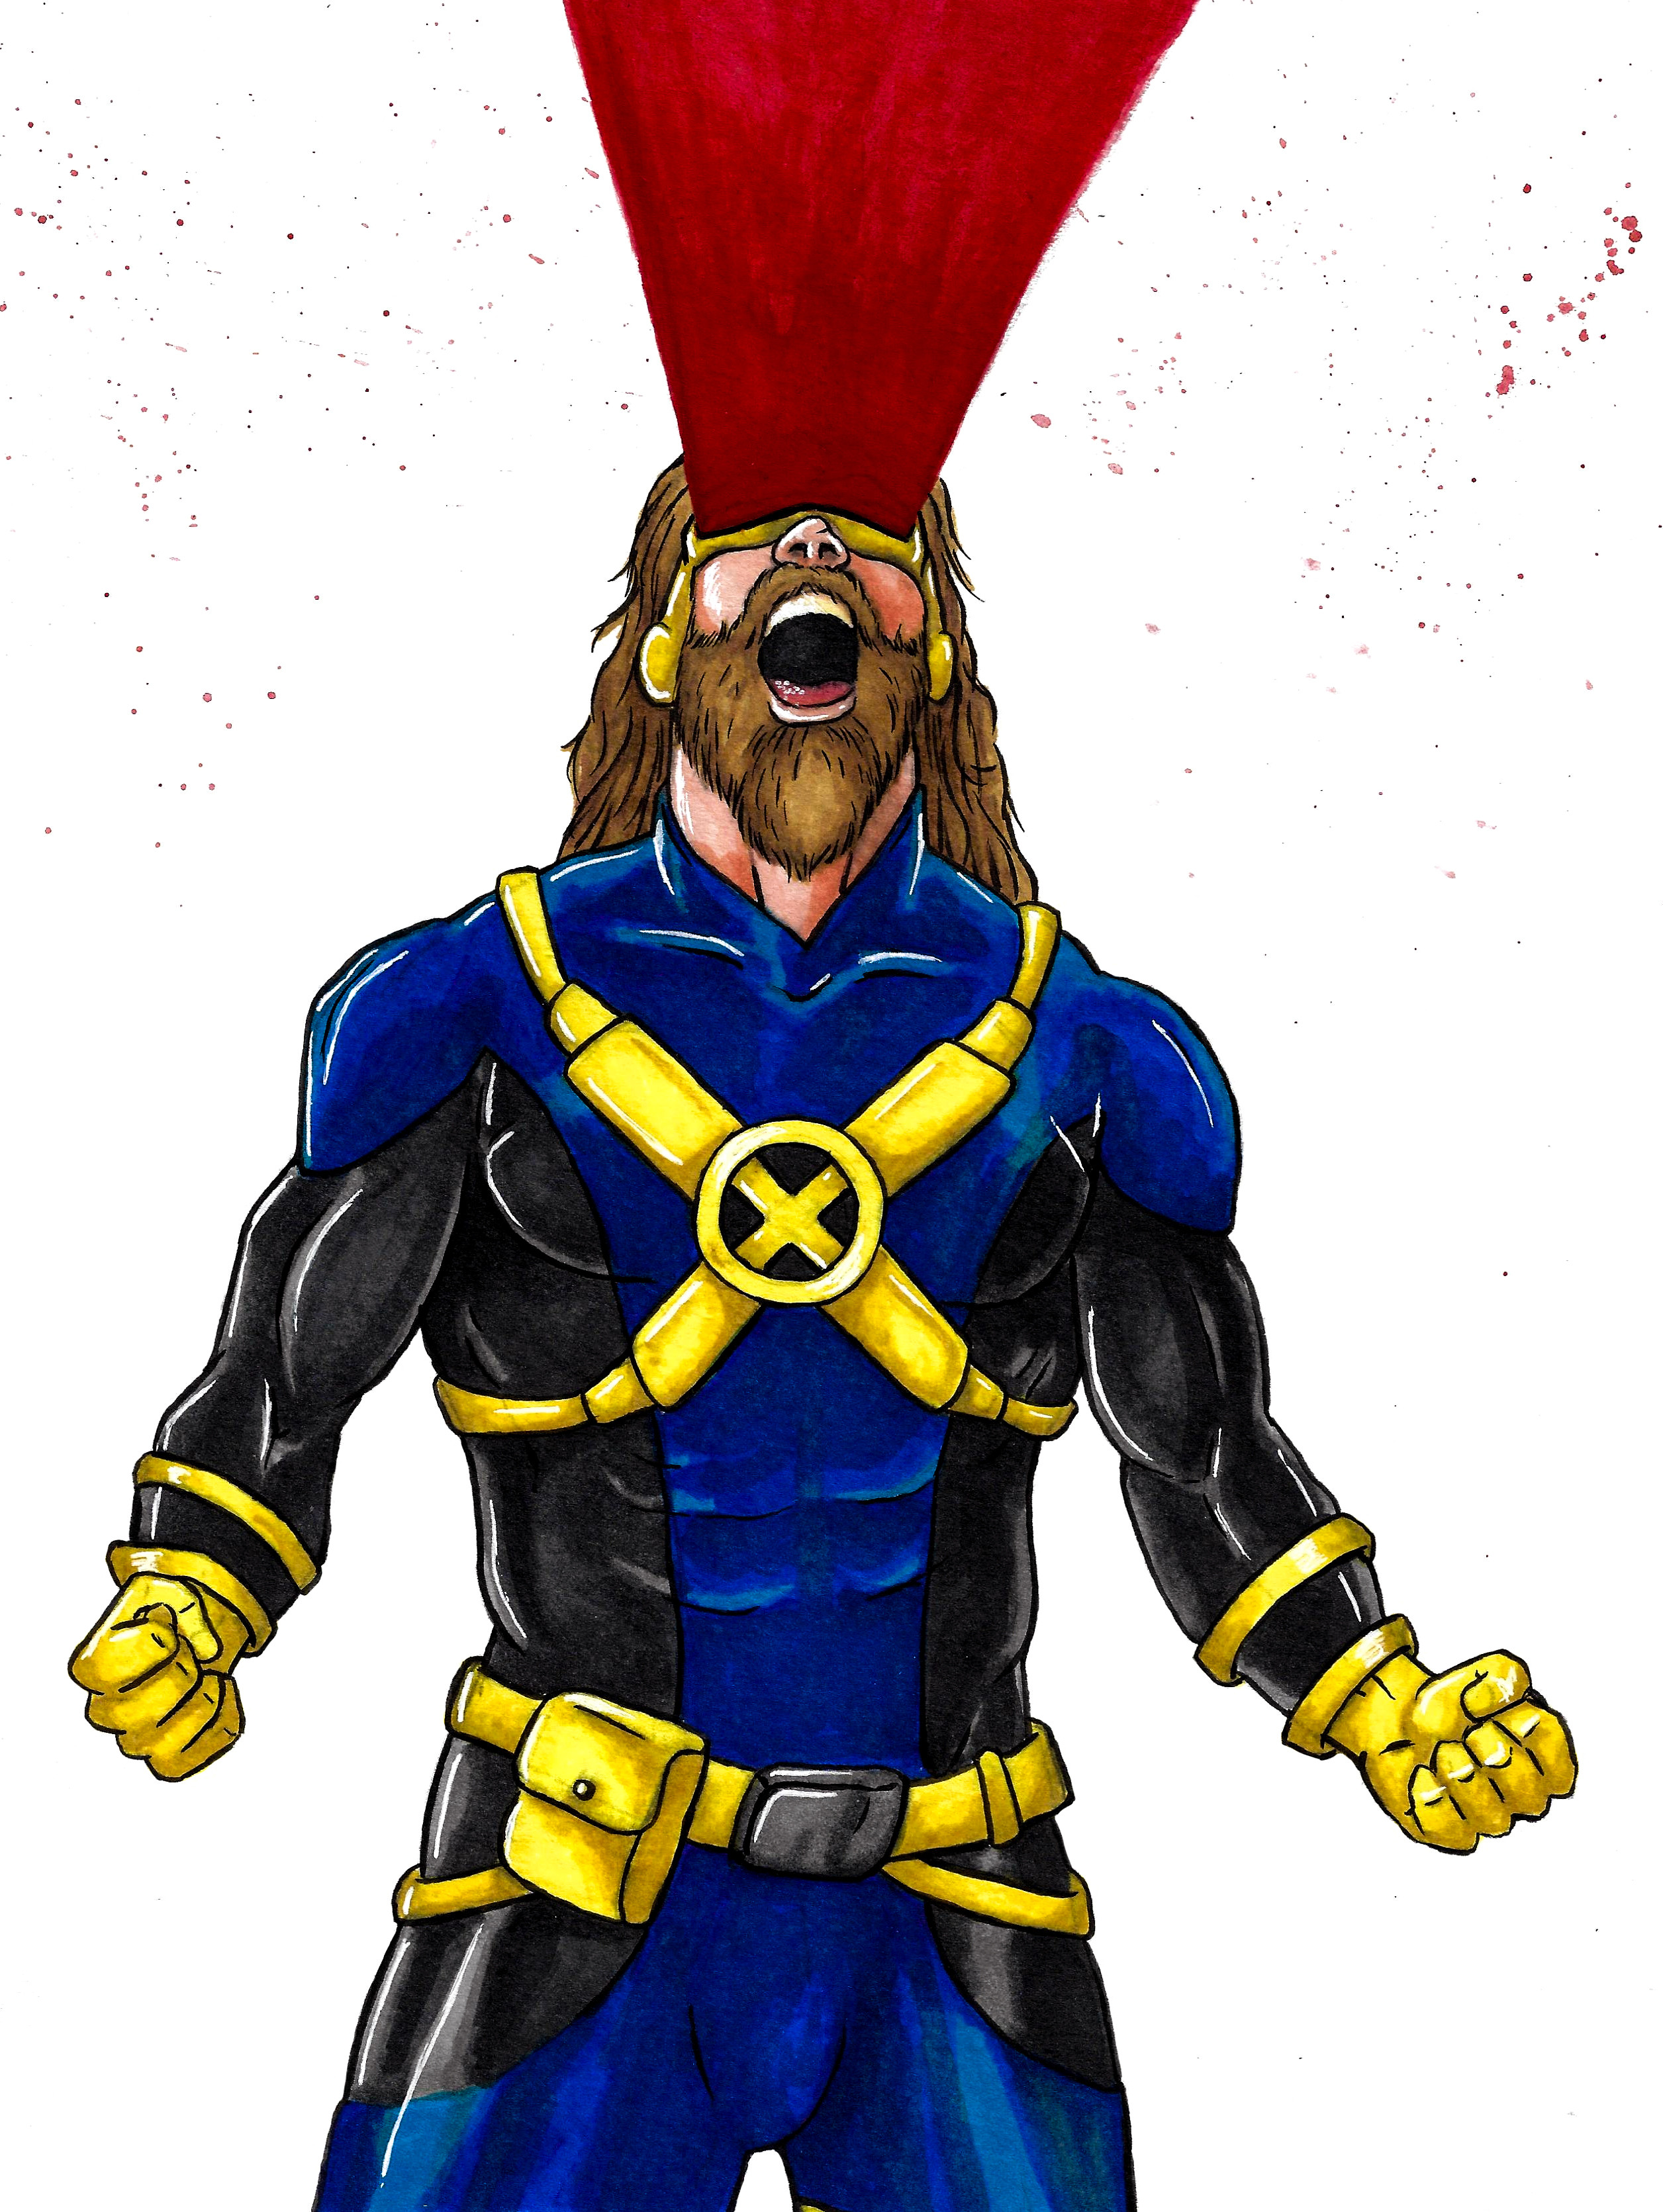 Cyclops, X-men fan art
Original costume design 